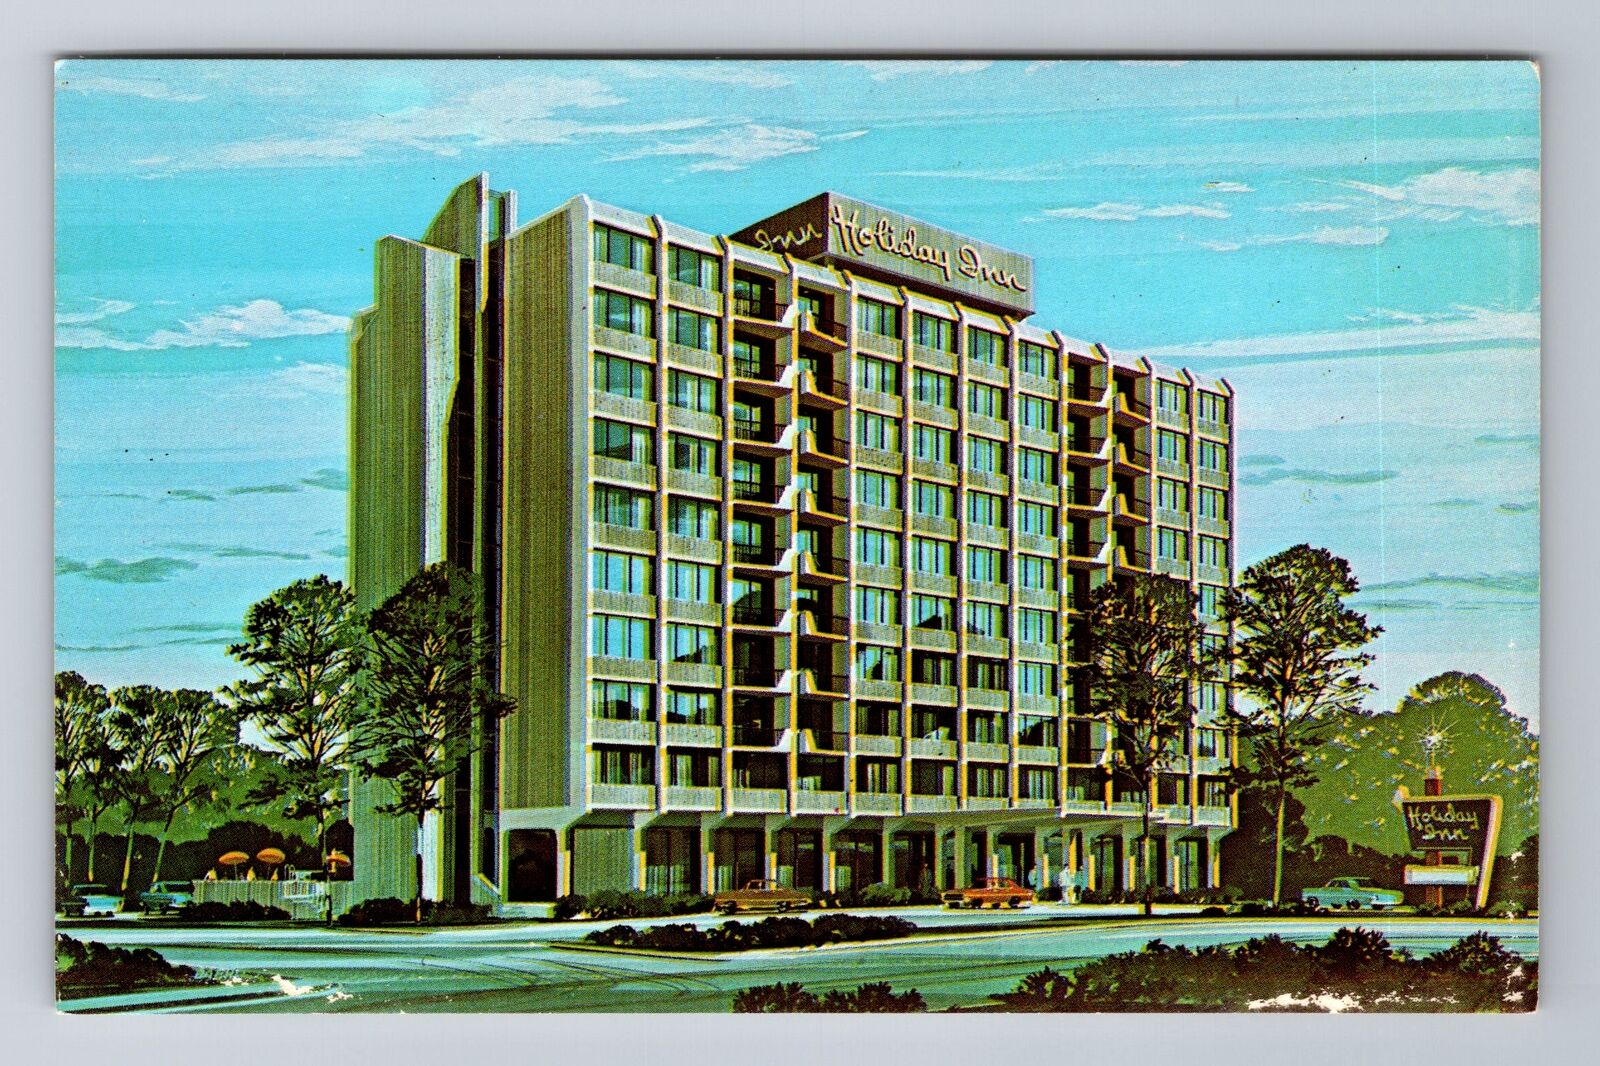 Staten Island NY-New York, Holiday Inn, Advertising, Antique Vintage Postcard